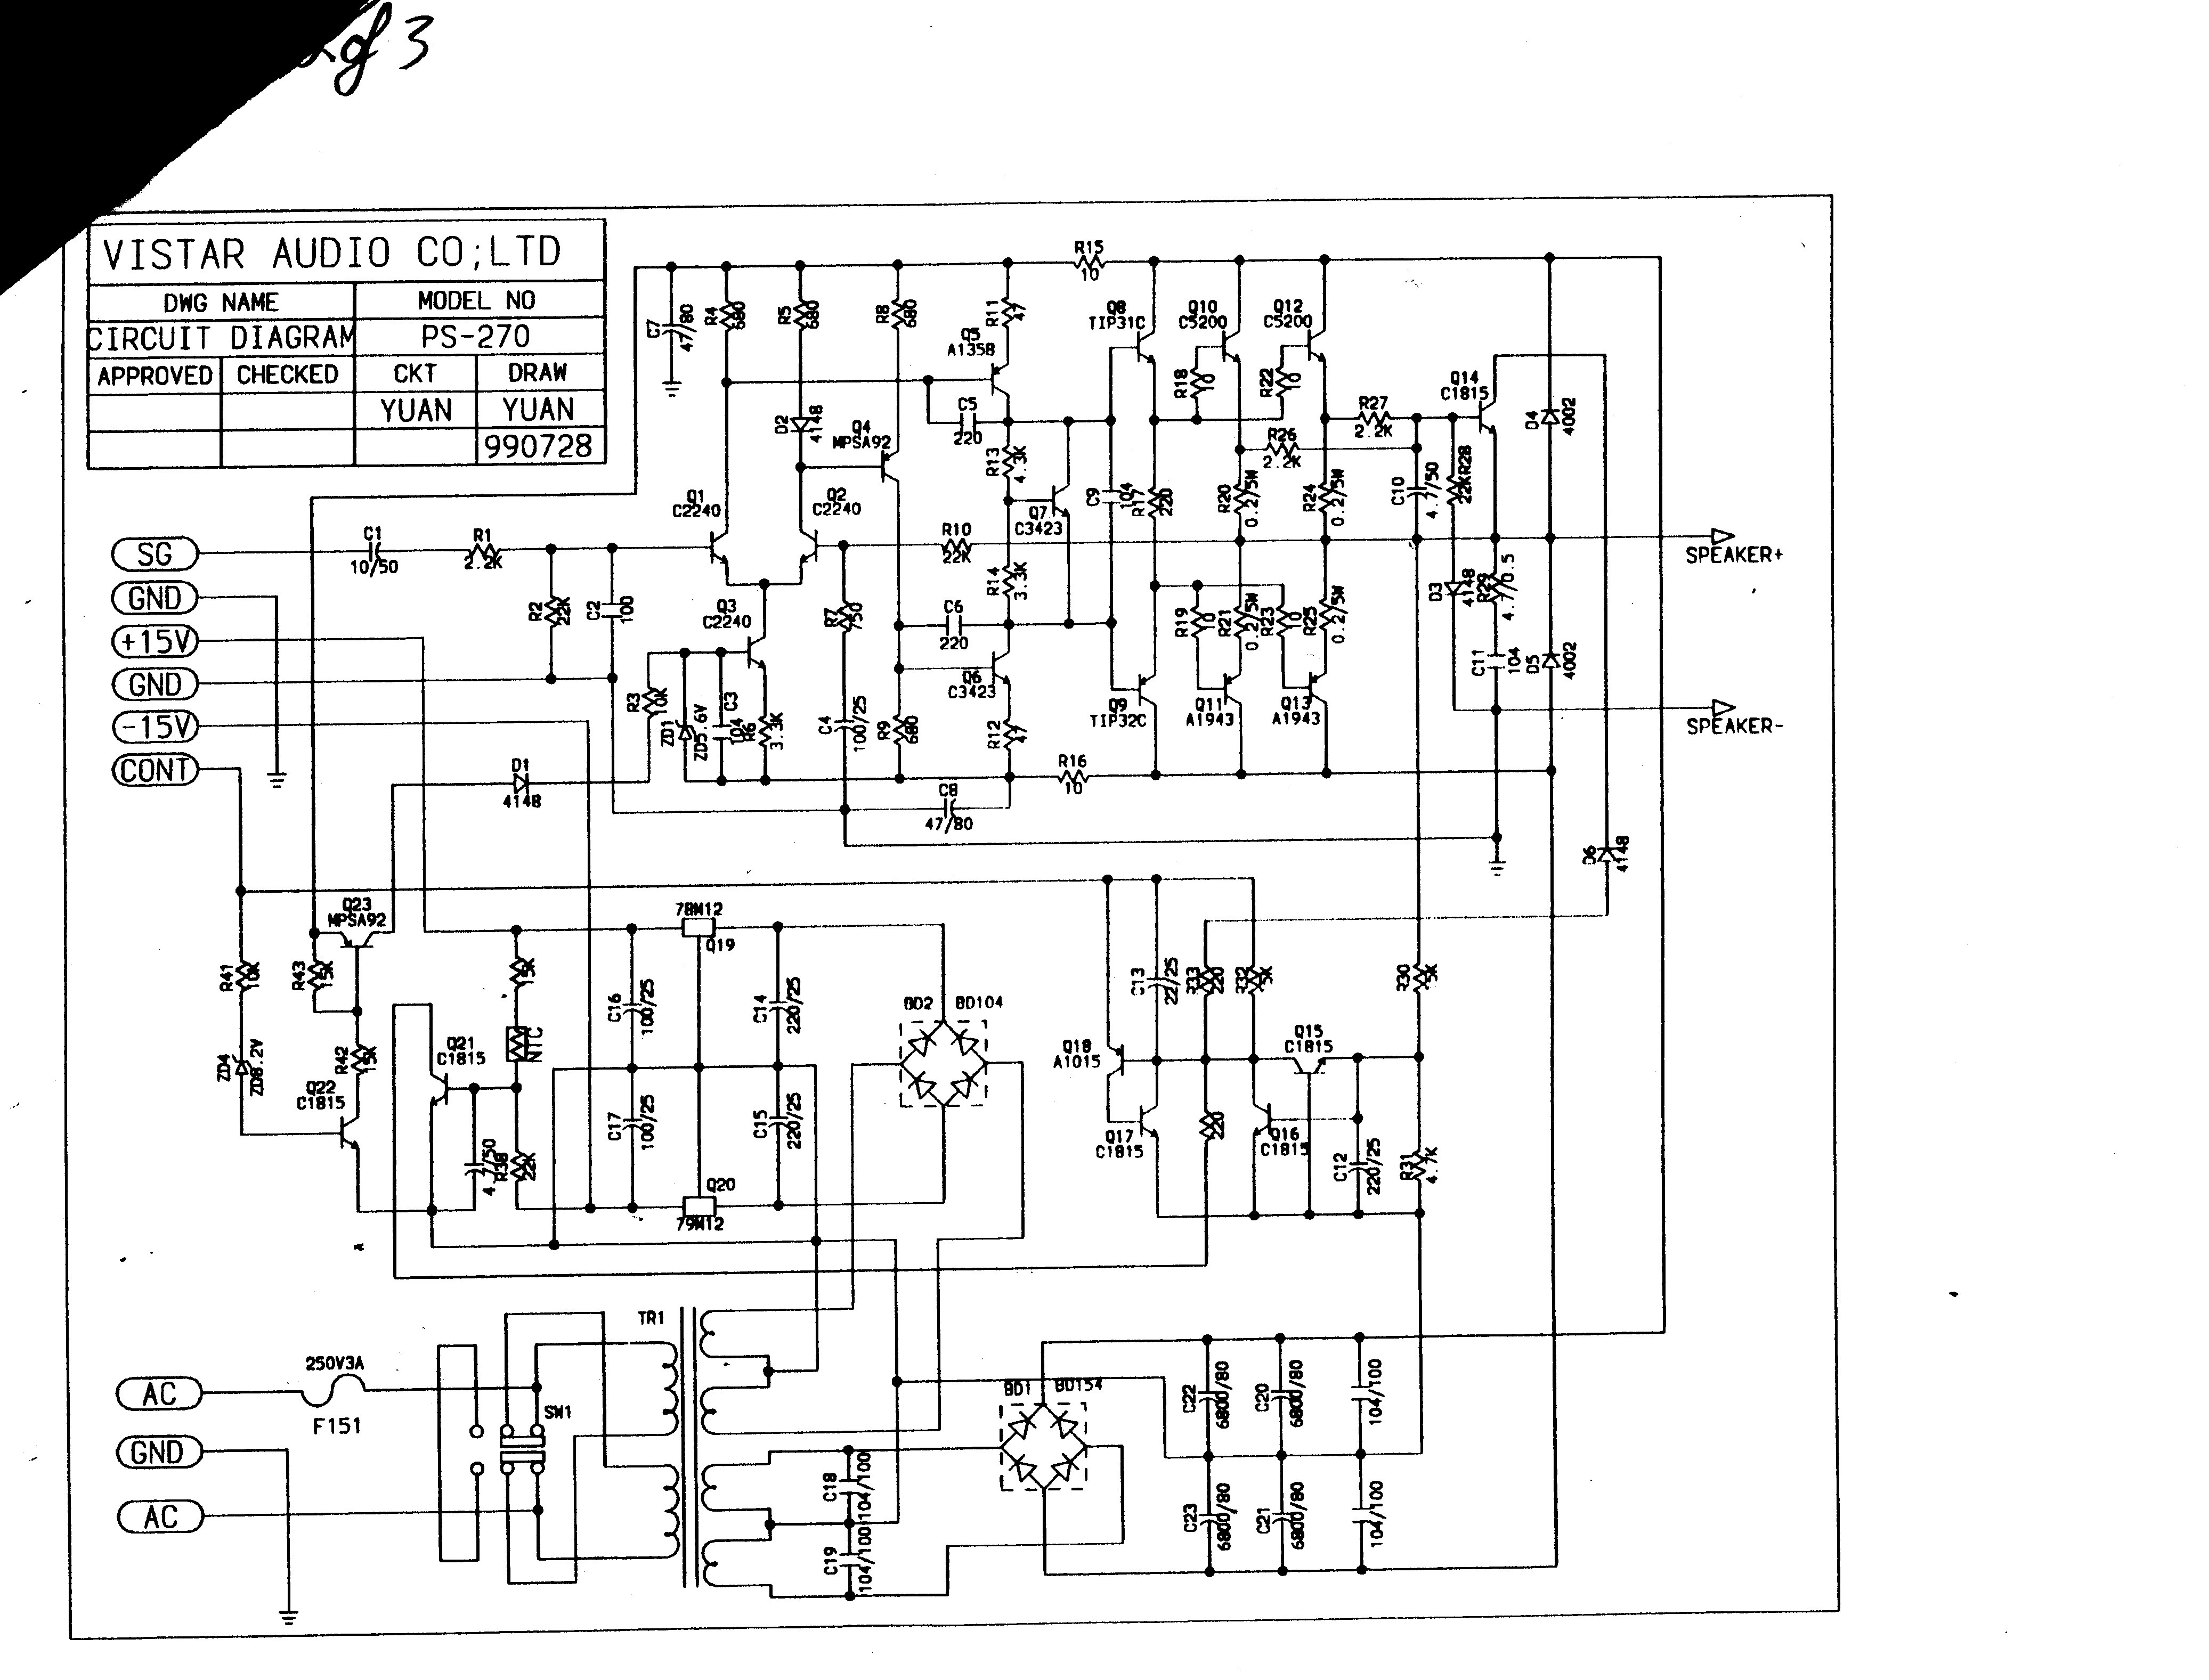 Diagram Of Subwoofer Circuit